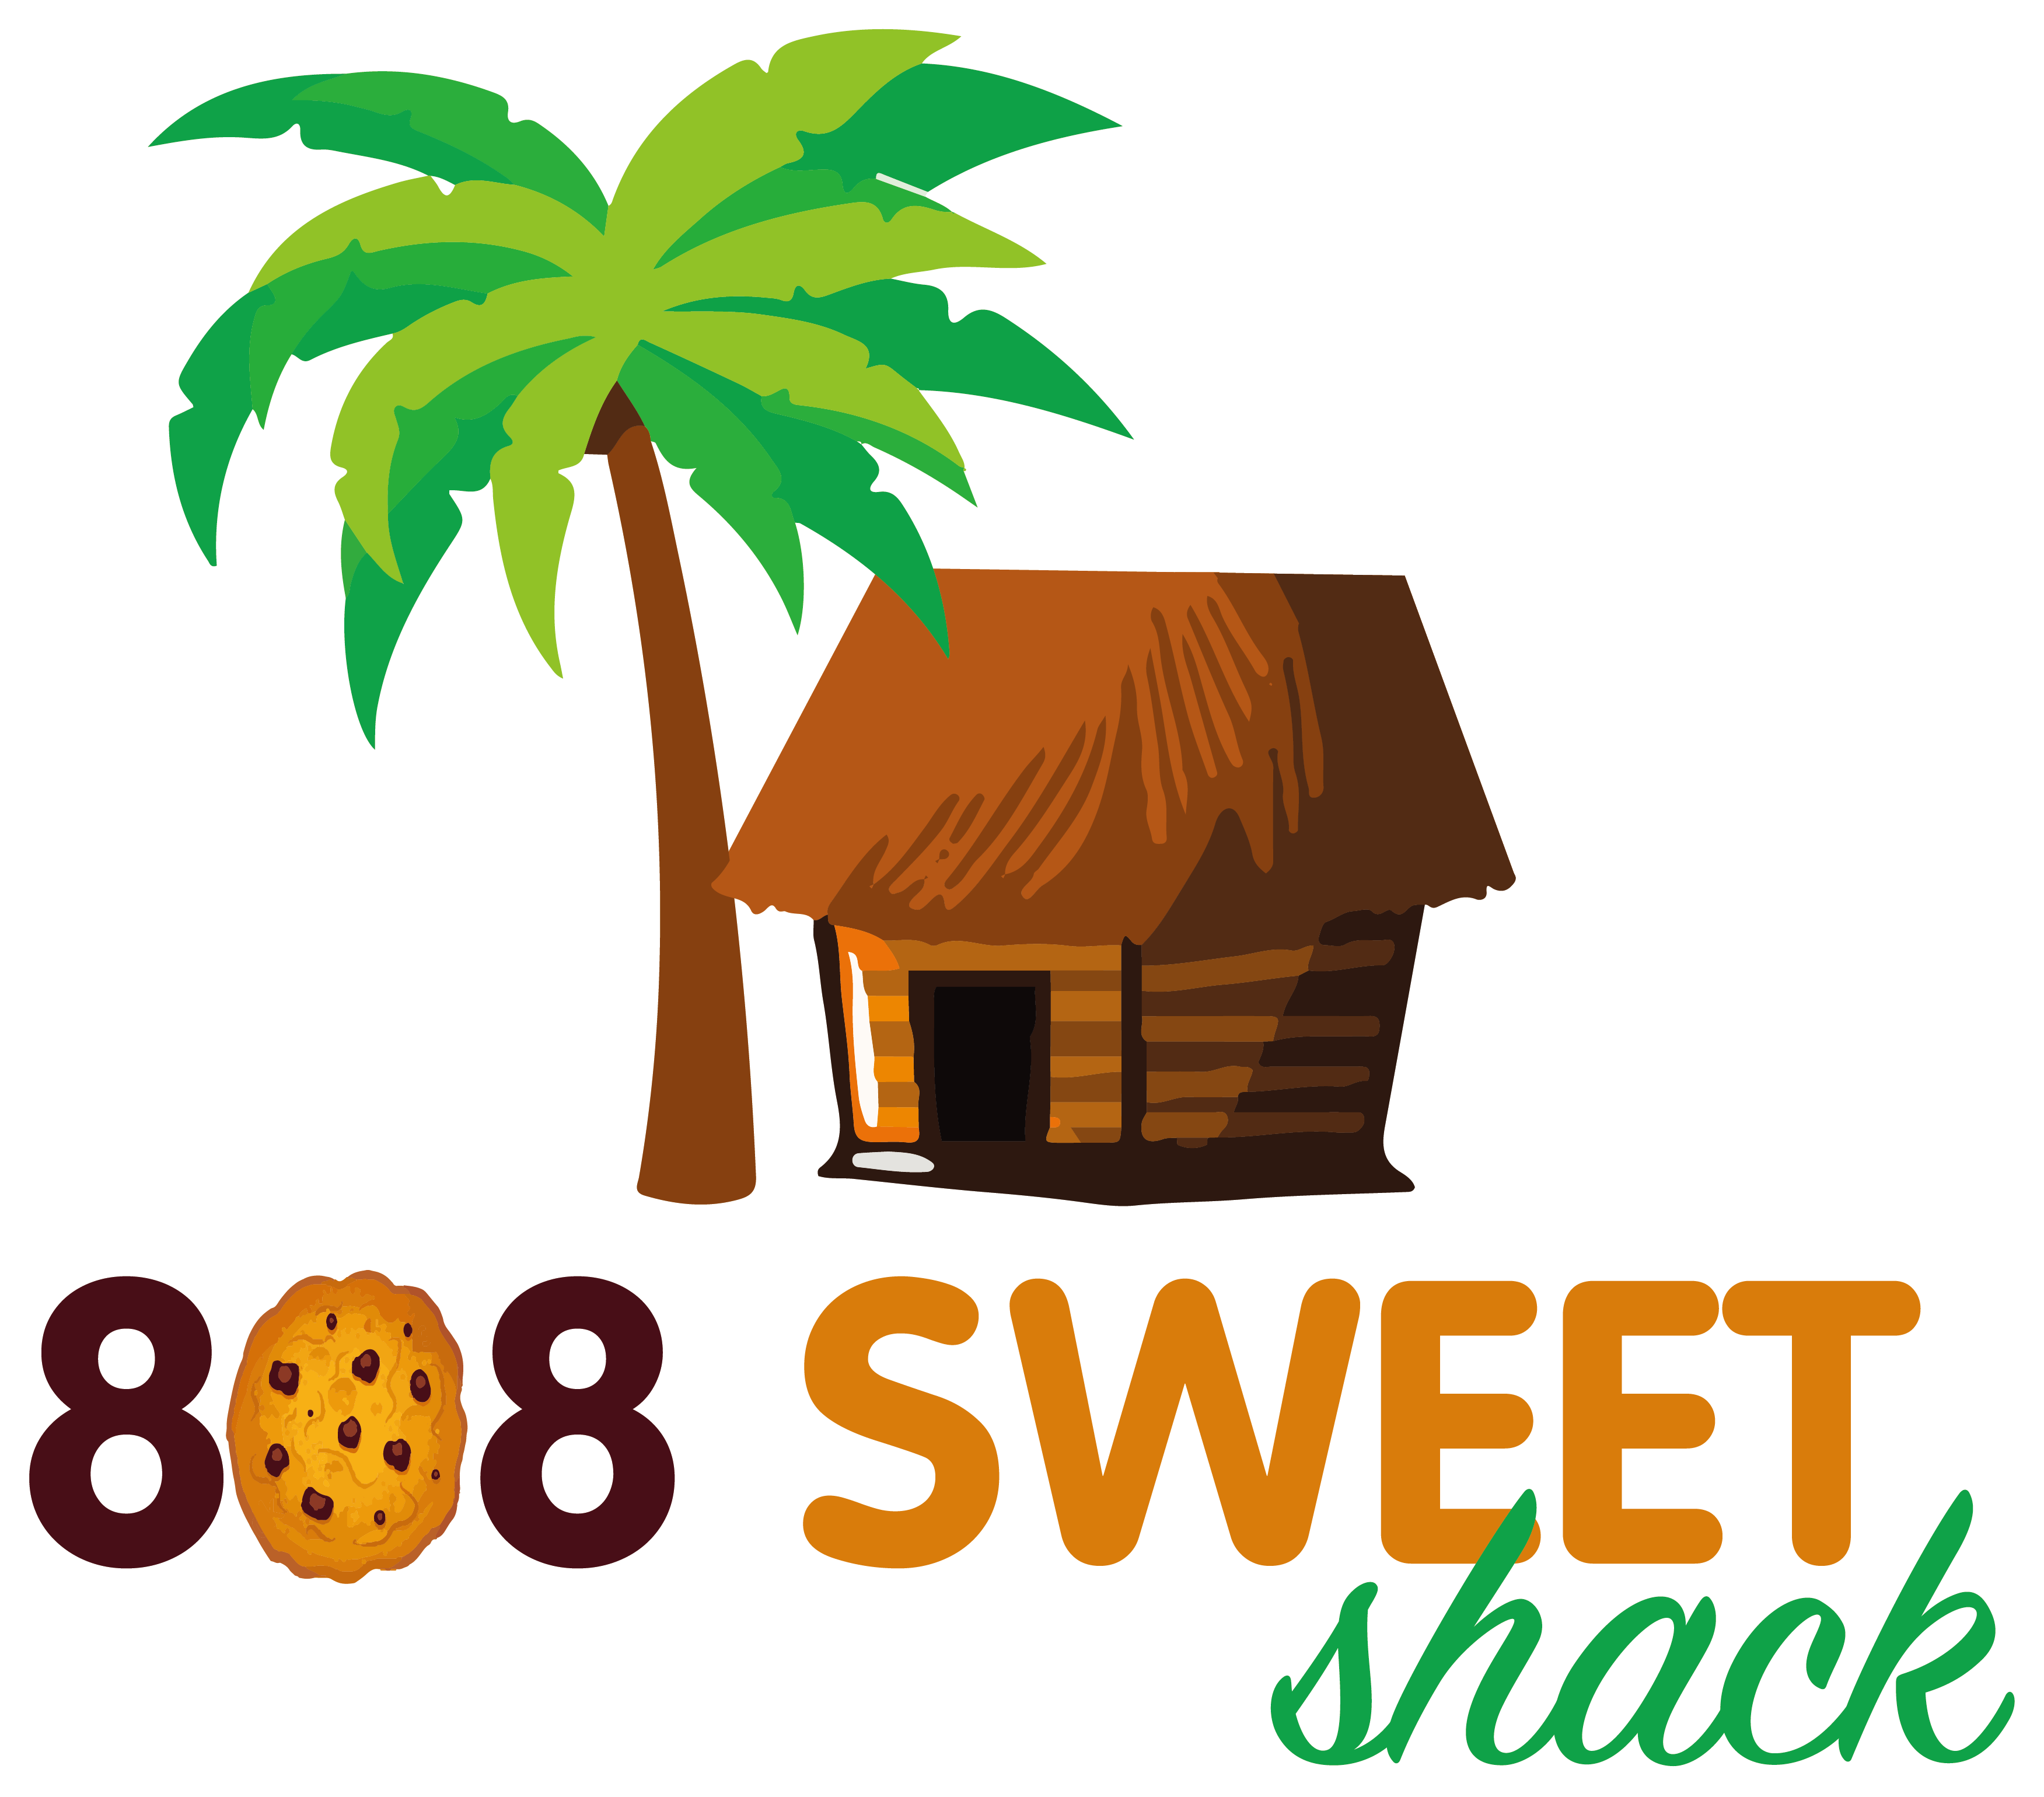 808 Sweet Shack